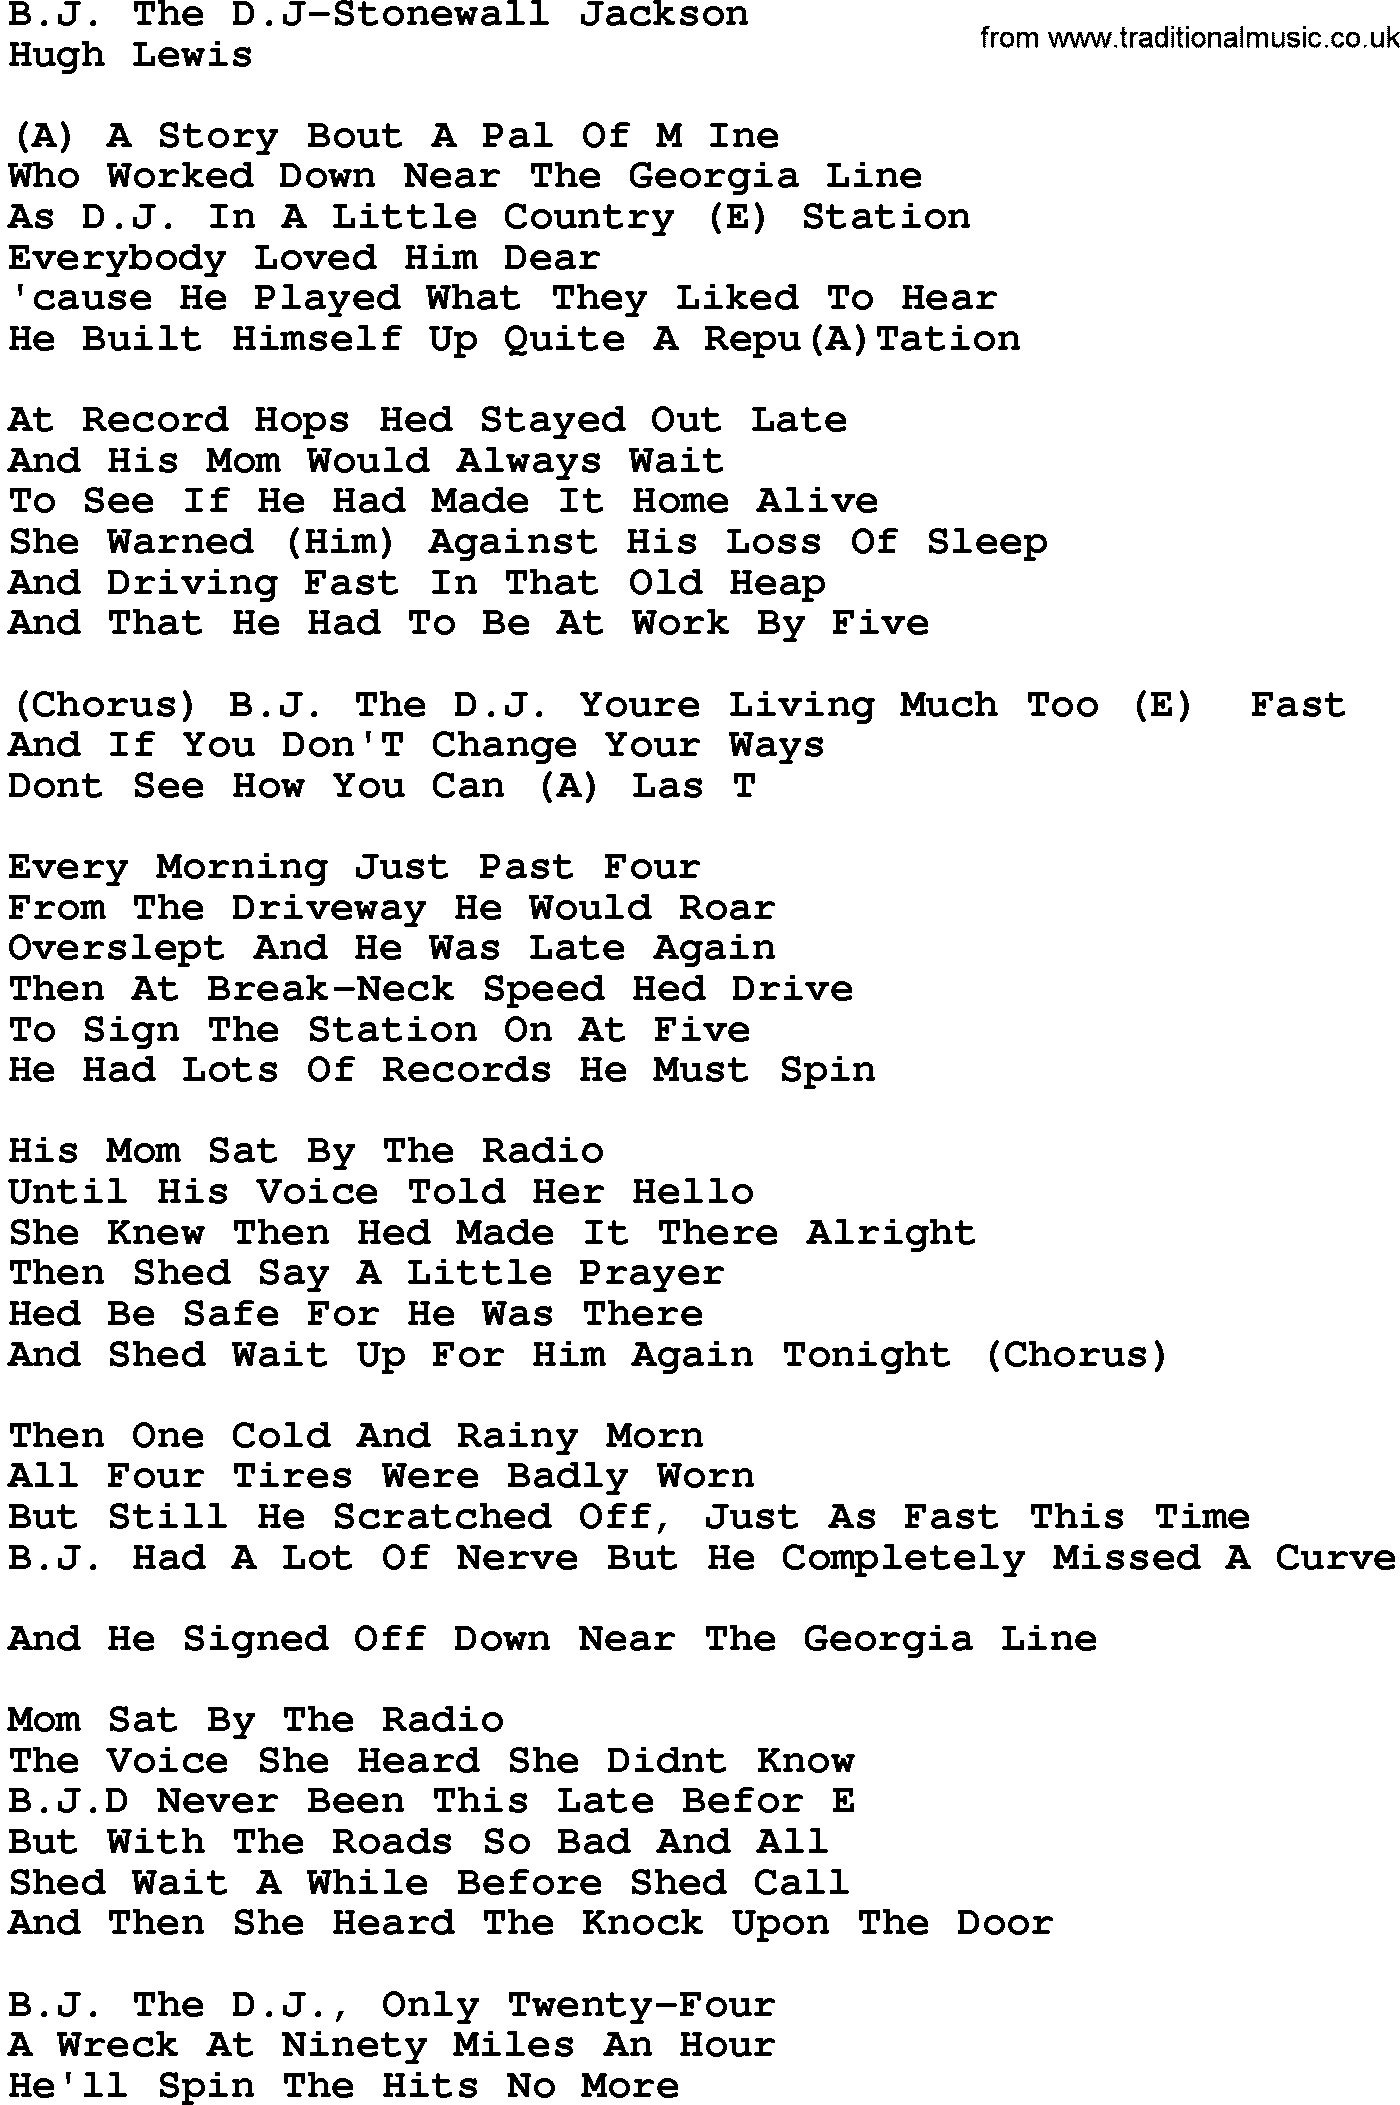 Country music song: B J The D J-Stonewall Jackson lyrics and chords